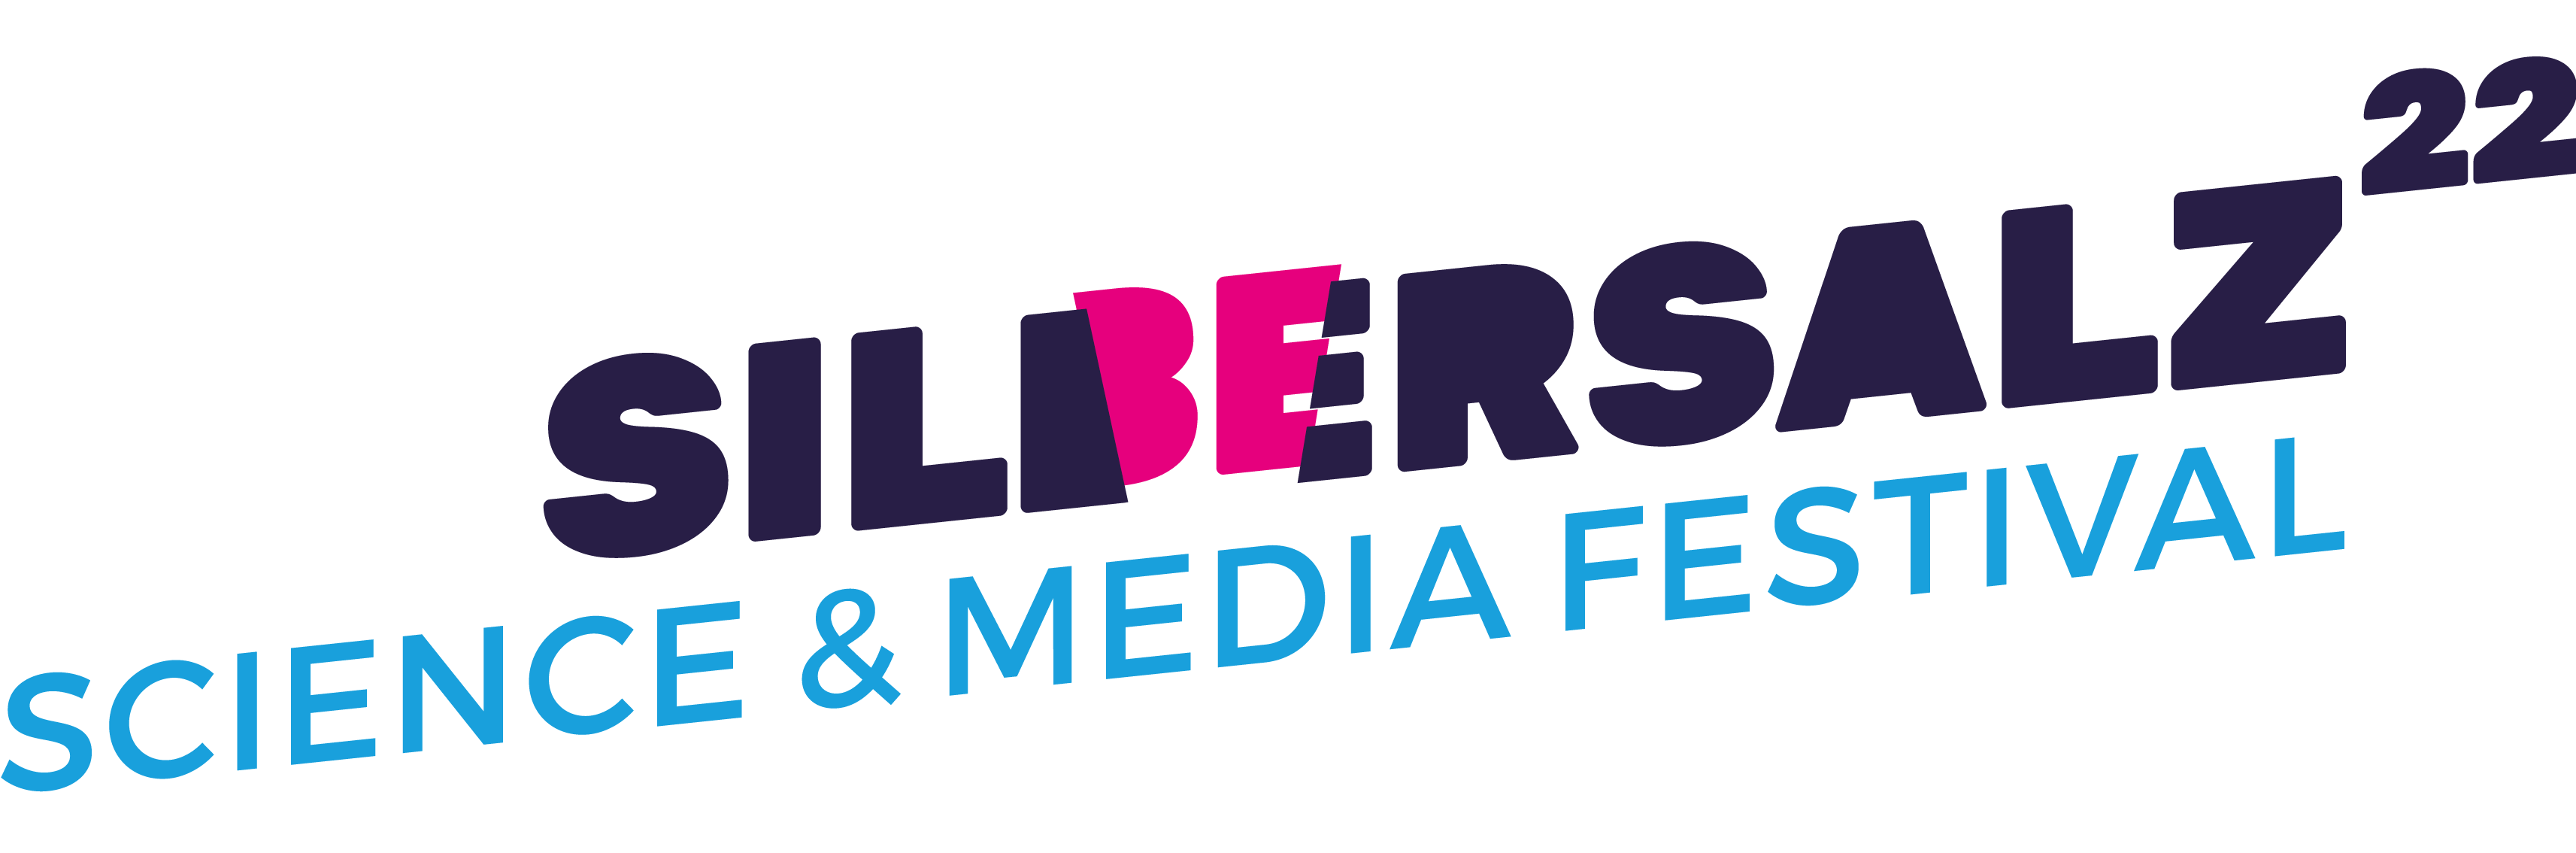 Logo Silbersalz Festival